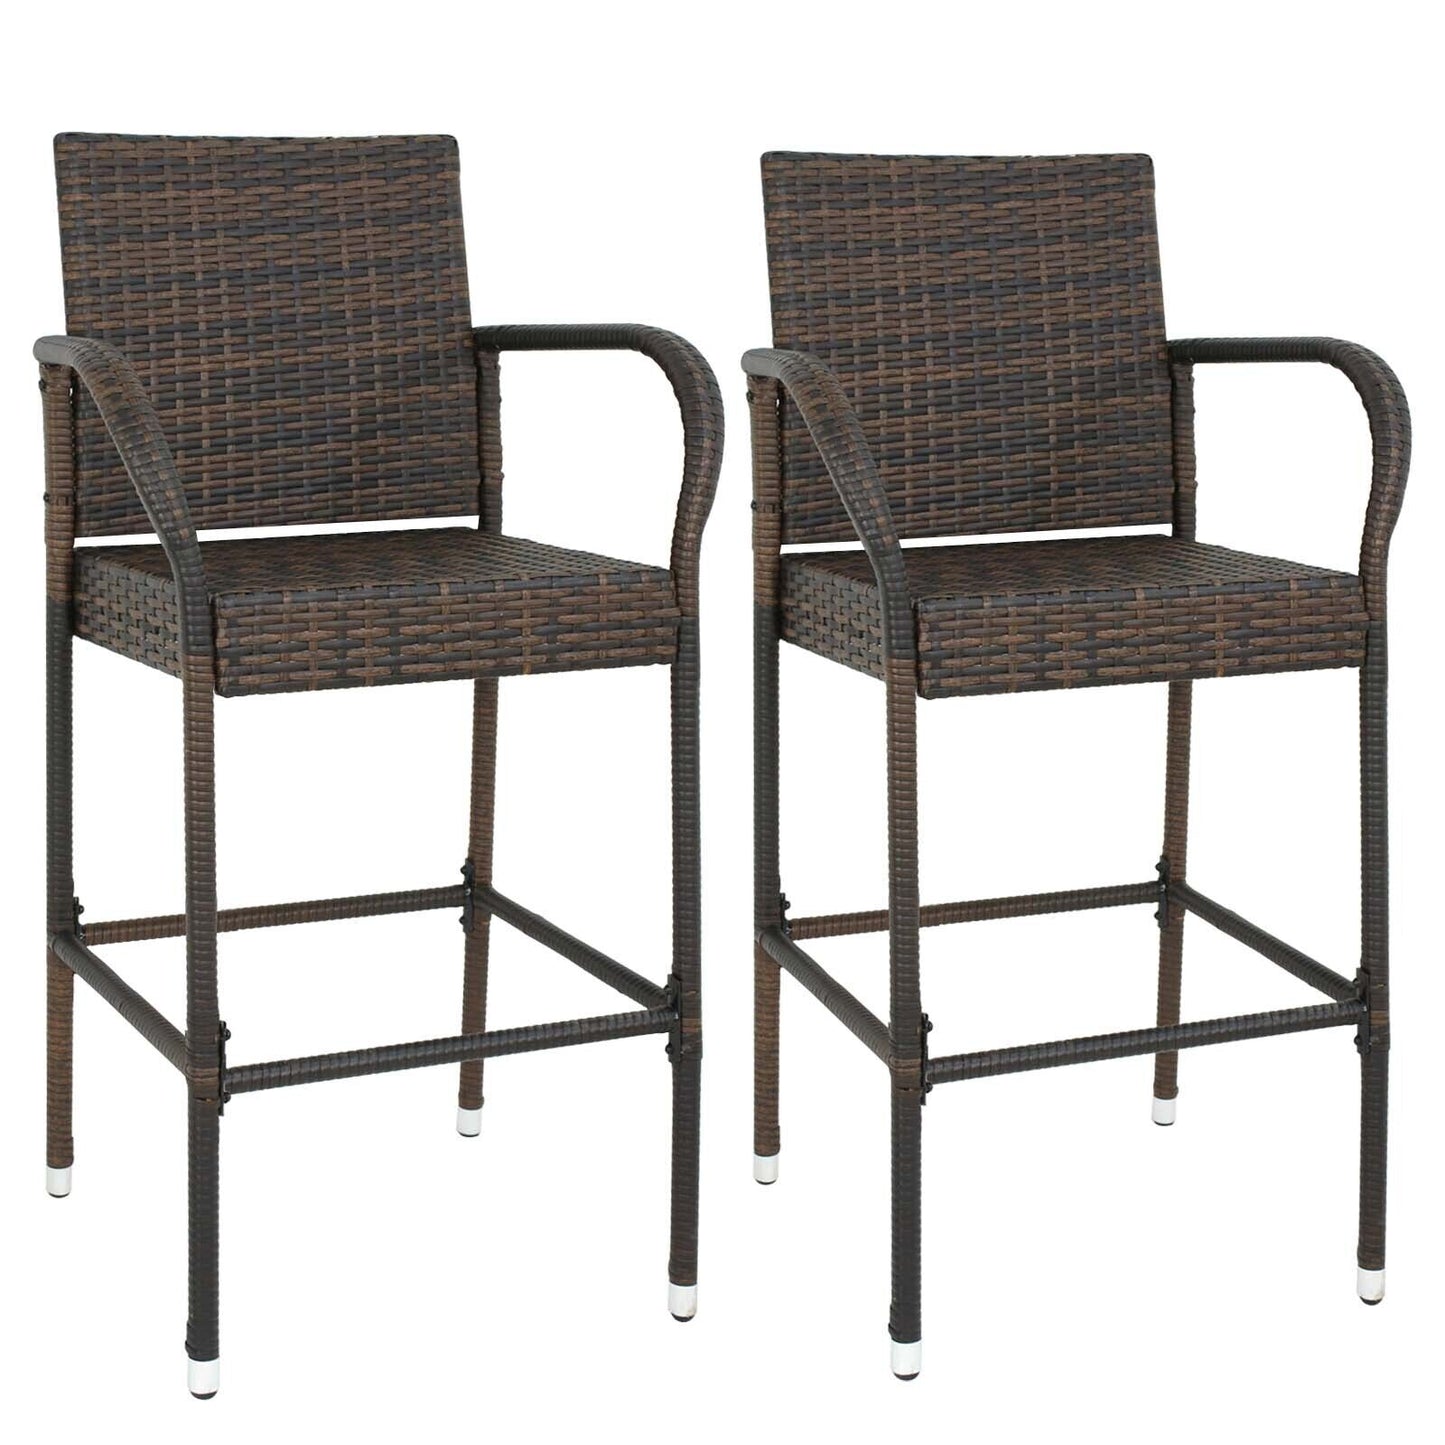 6PCS Wicker Rattan Barstools Backyard Patio Chairs Bar Stools Furniture Brown